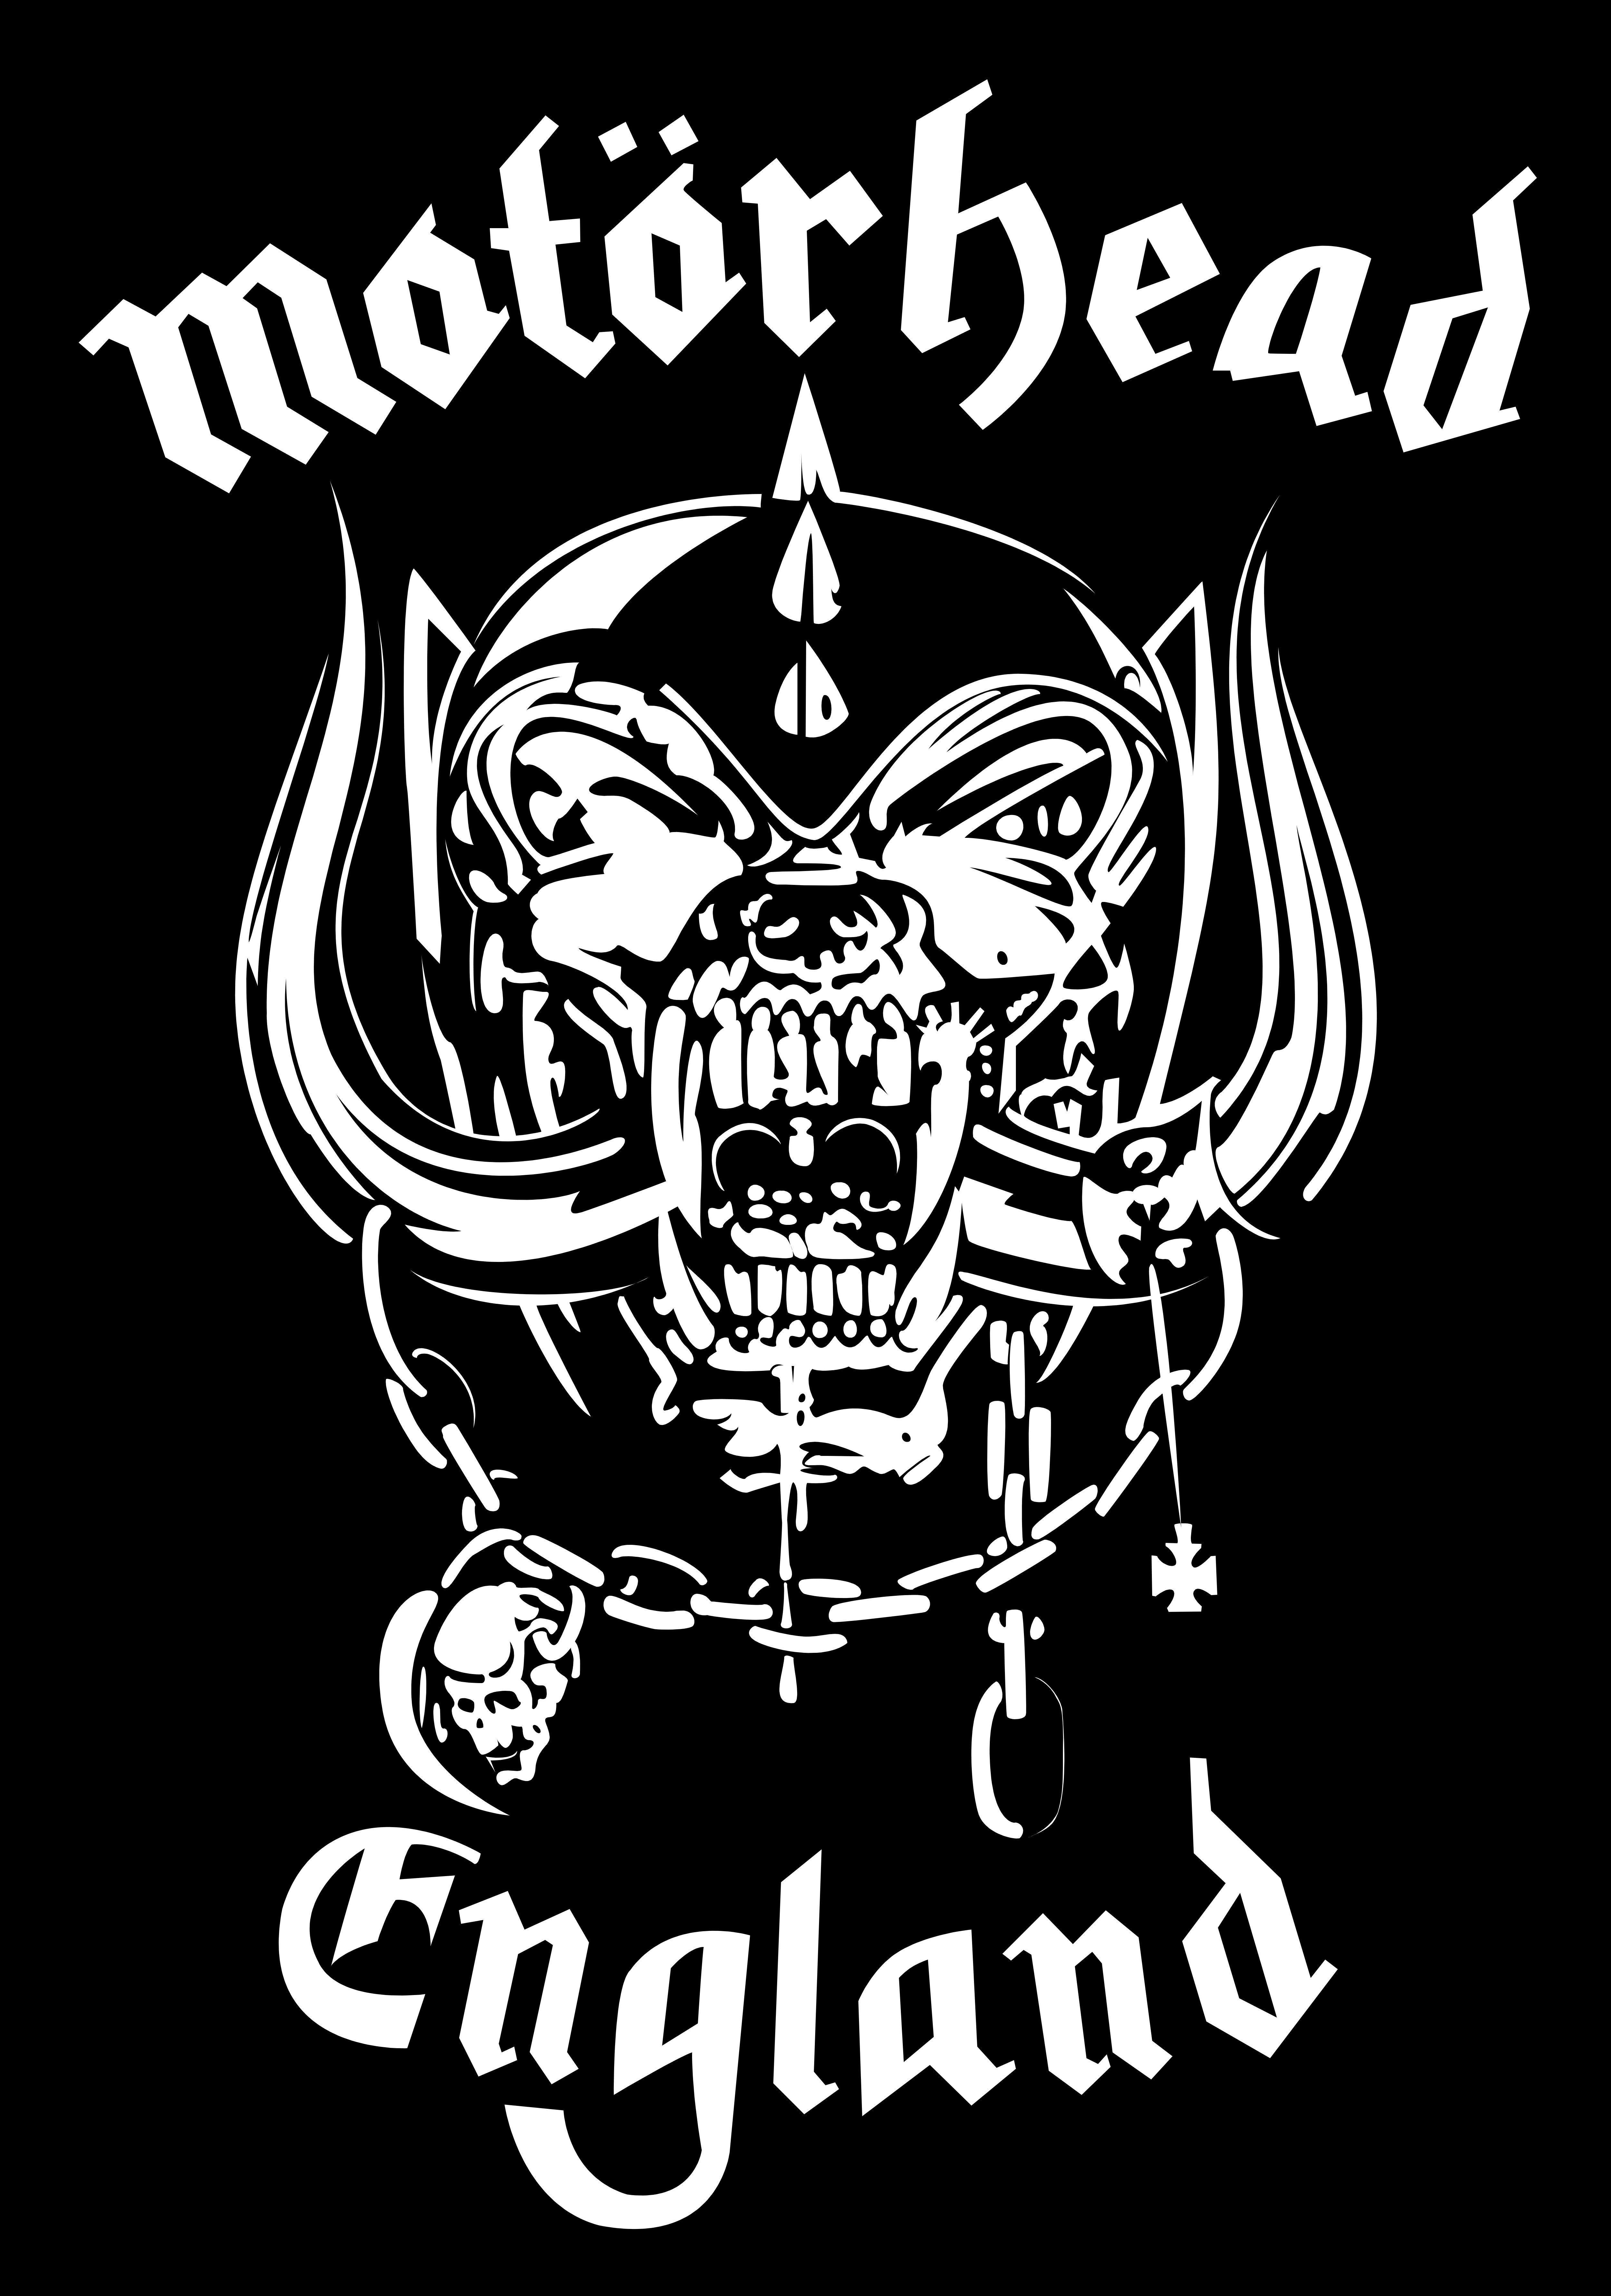 Motorhead Logo - Pin by Don on Music in 2019 | Heavy Metal, Rock, Band